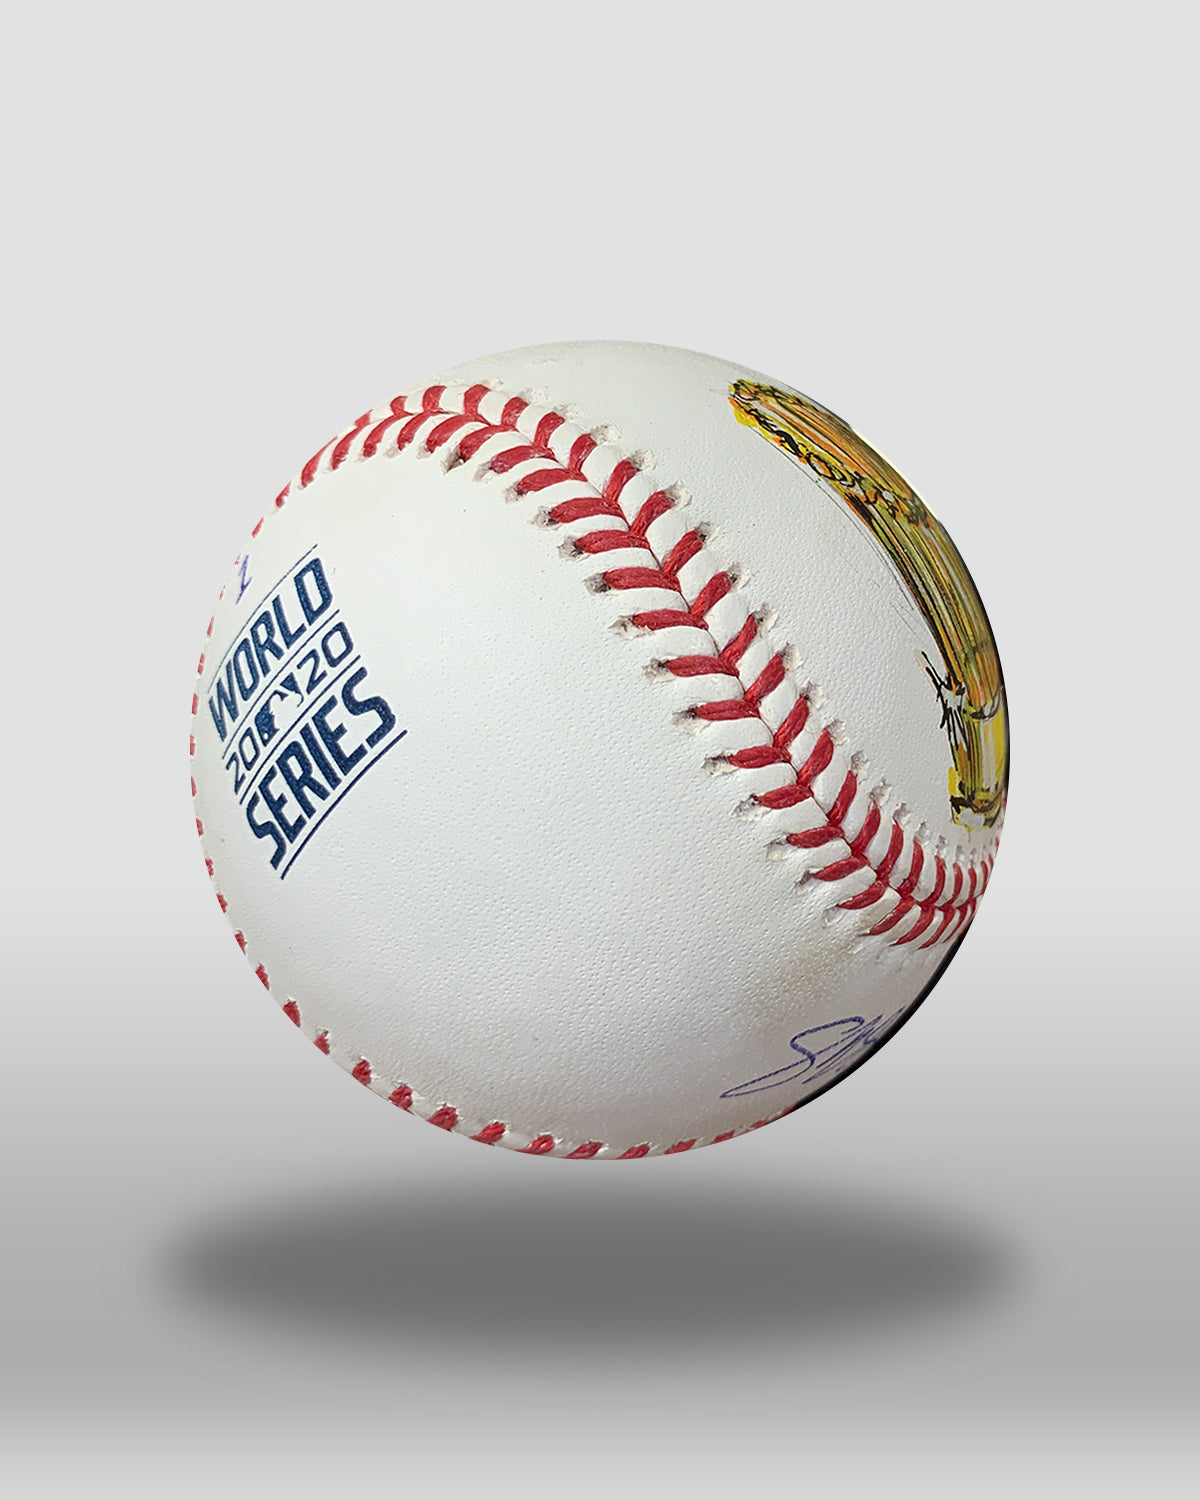 World Series Trophy 2020 Hand-Painted Baseball Art